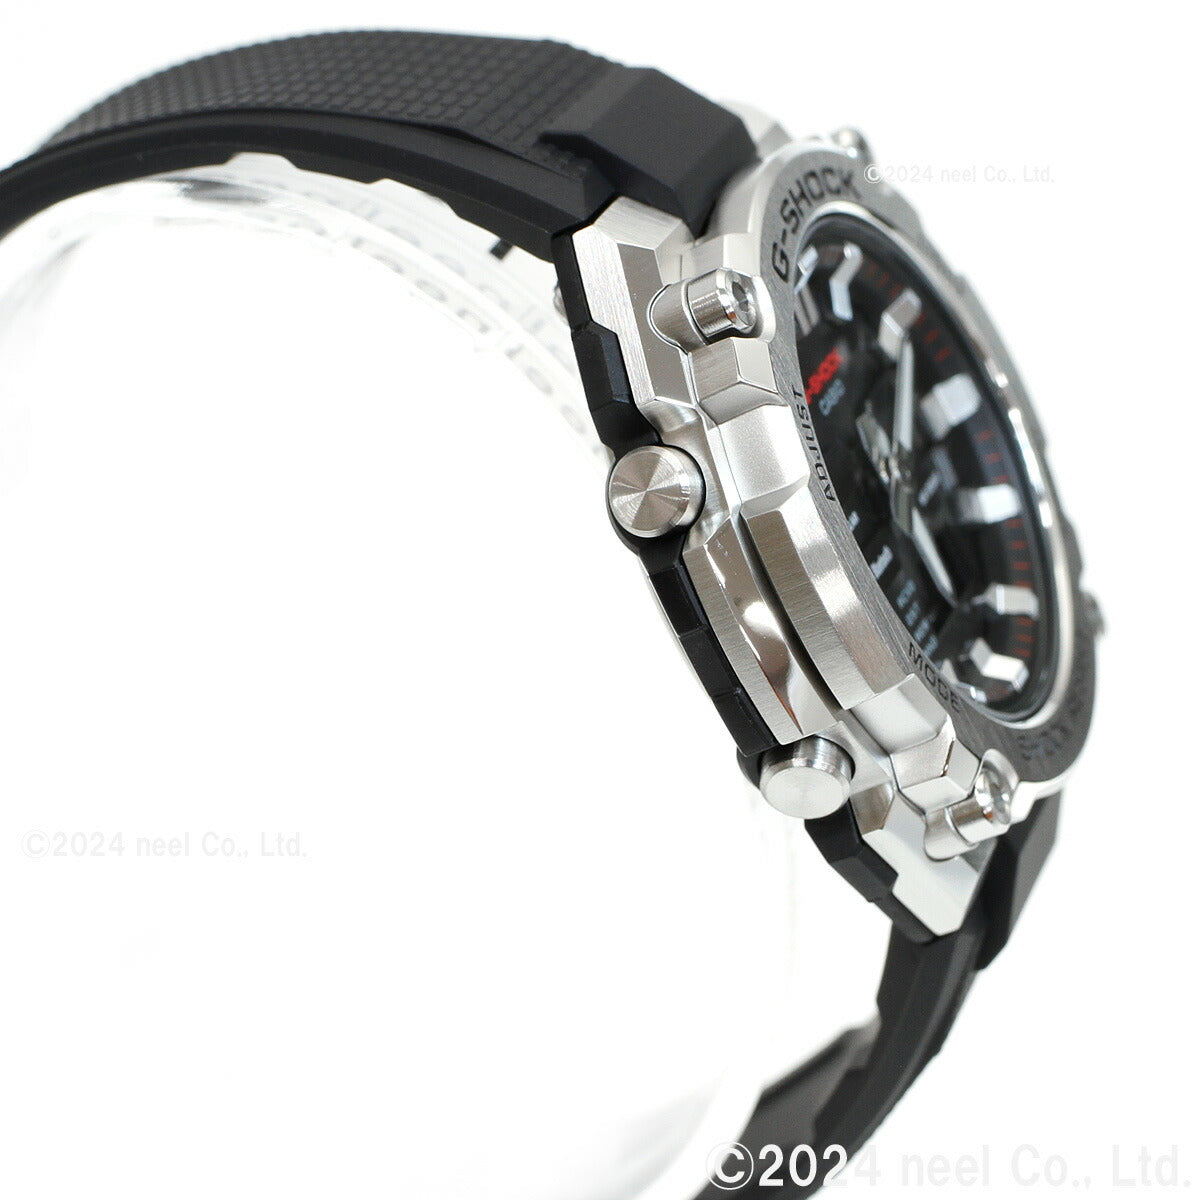 G-SHOCK ソーラー G-STEEL カシオ Gショック Gスチール CASIO 腕時計 メンズ タフソーラー GST-B600-1AJF スマートフォンリンク【2024 新作】